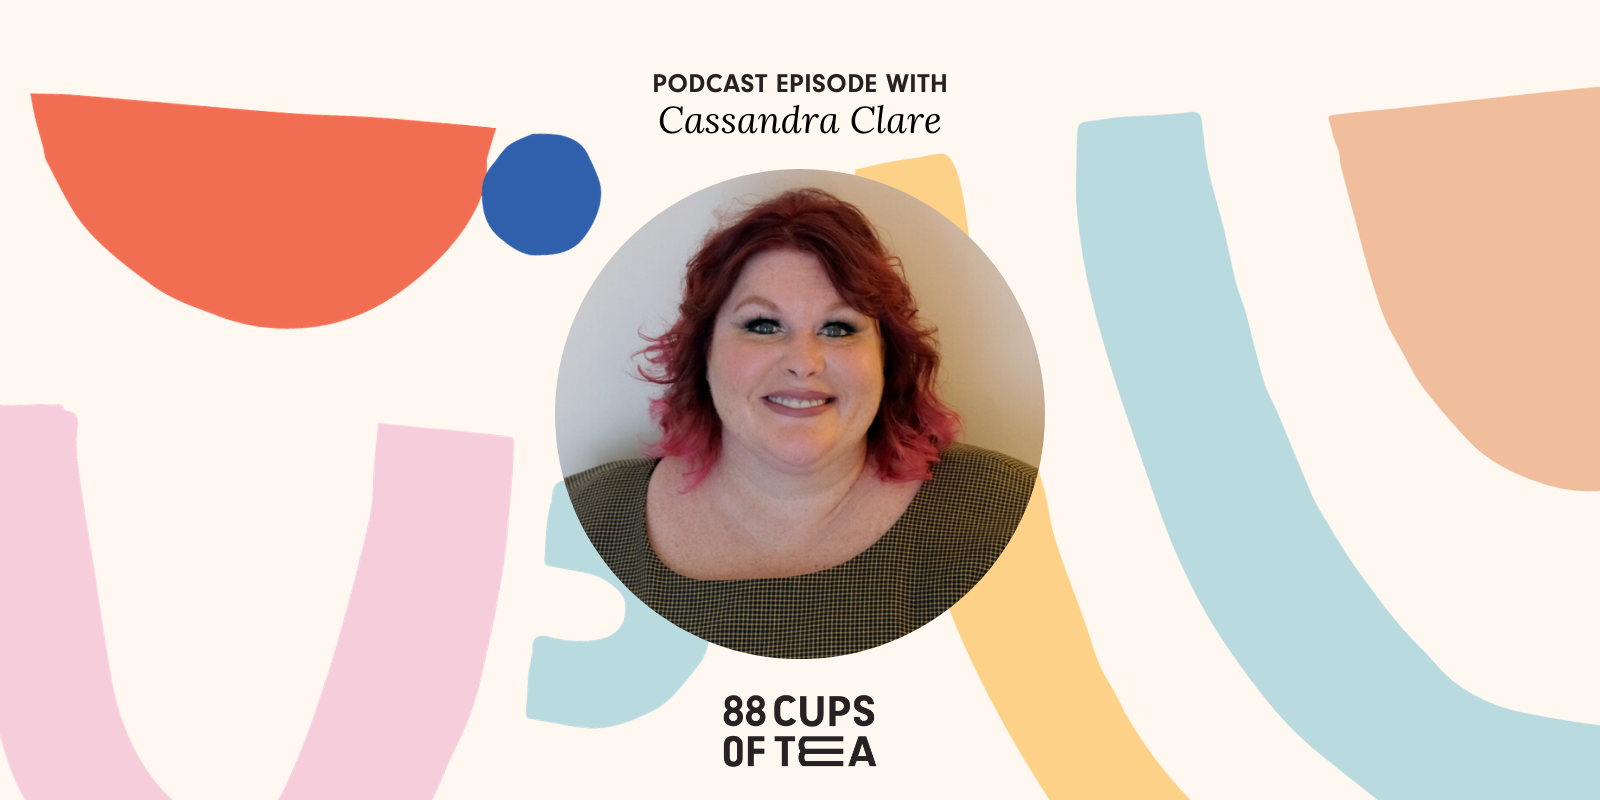 About Cassandra - Cassandra Clare